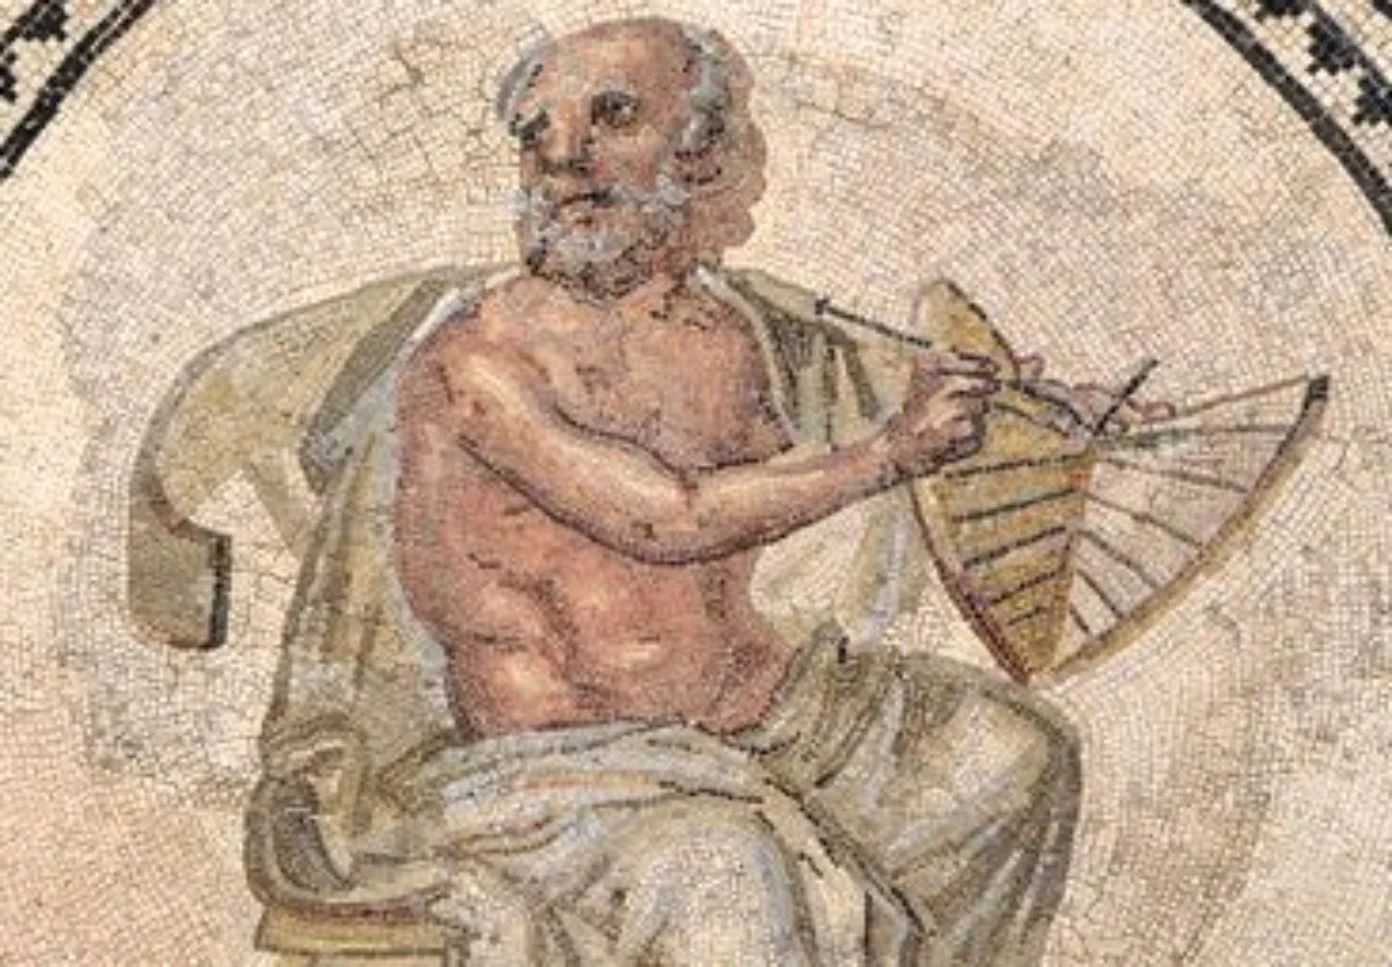 Mazhab Milesian berpusat di Miletus dan melahirkan tiga orang pemikir besar yang merupakan pionir filsafat dalam sejarah Yunani kuno.